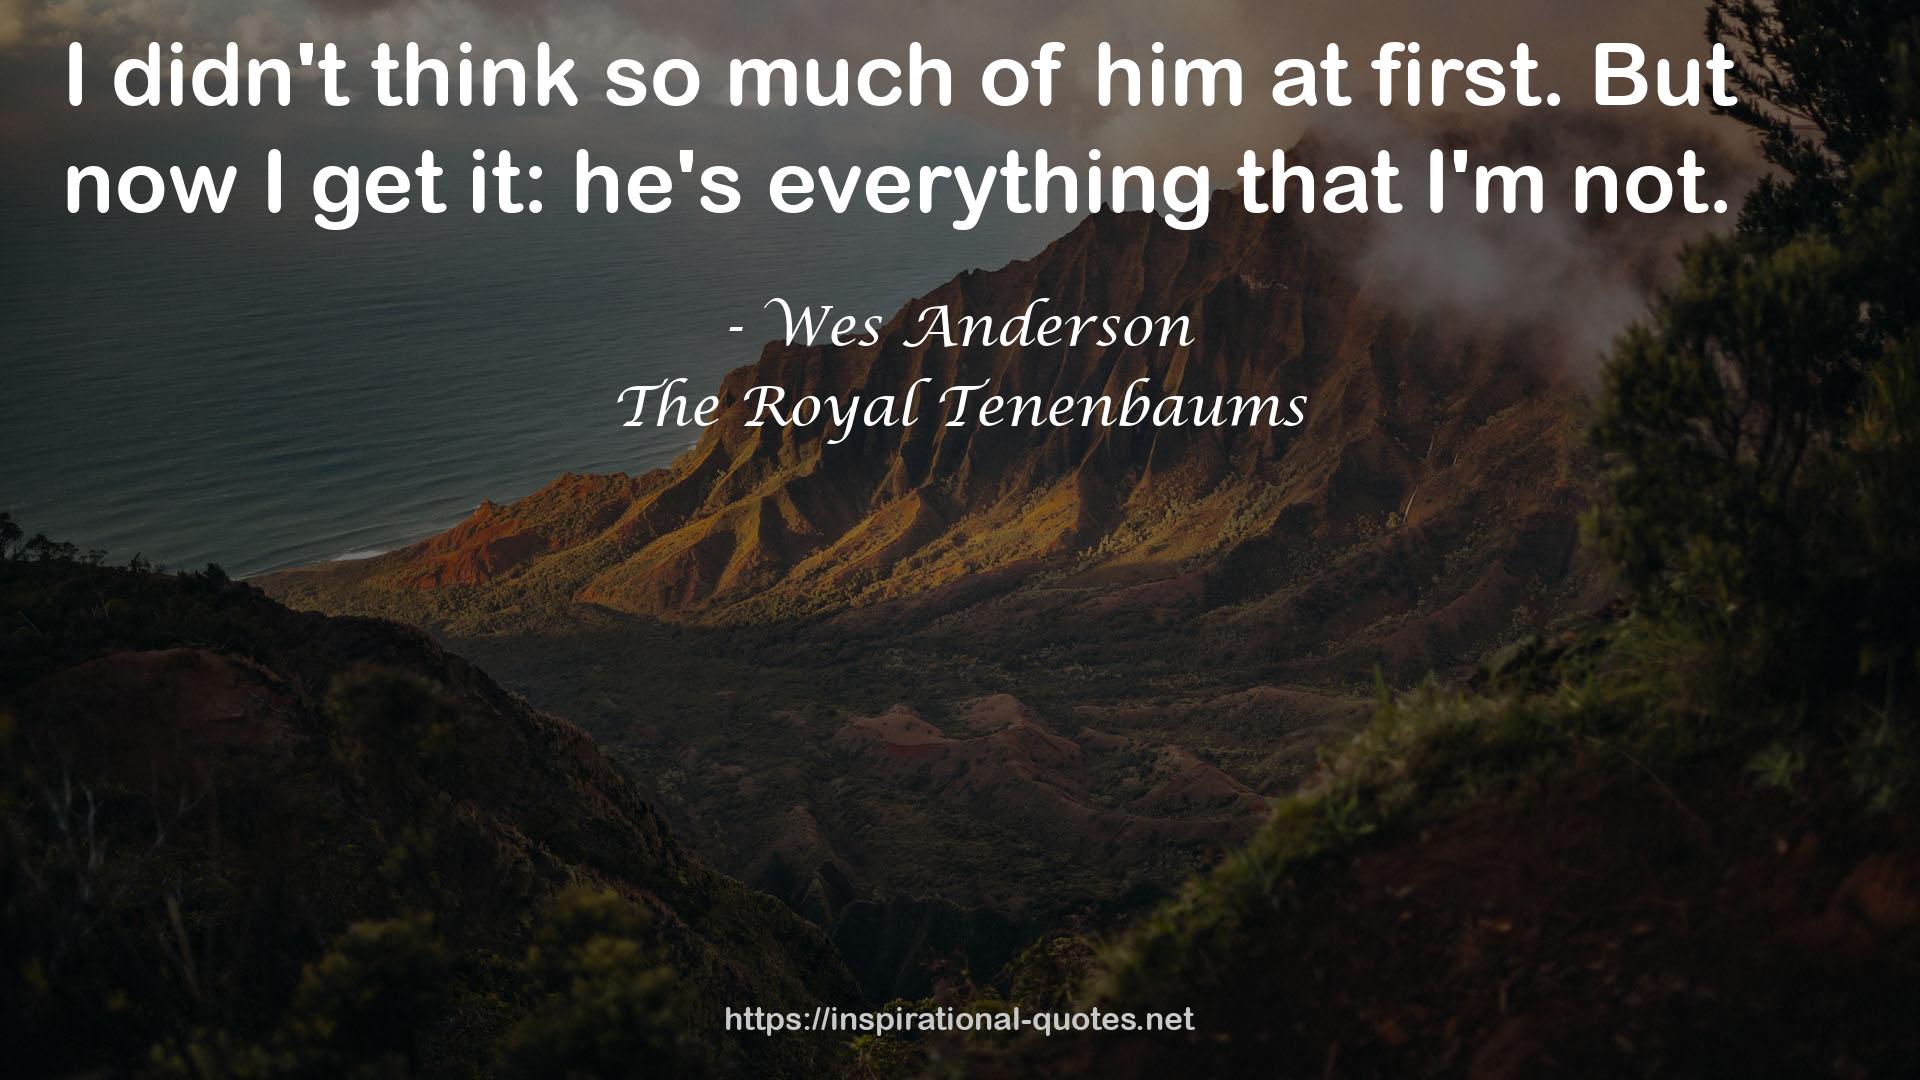 The Royal Tenenbaums QUOTES